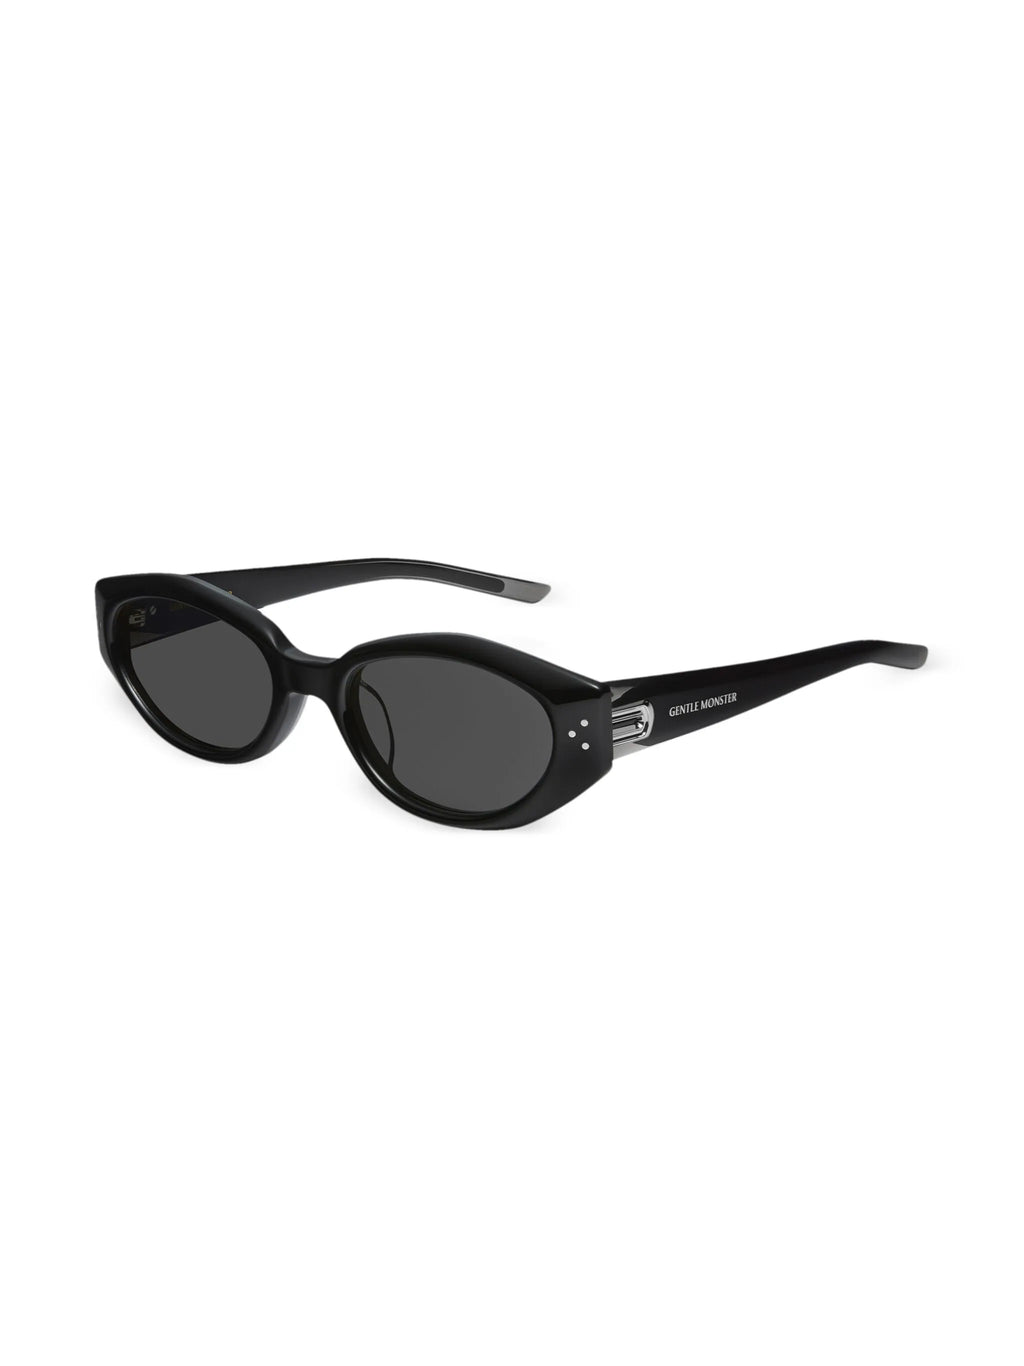 GENTLE MONSTER DADA-01 Sunglasses